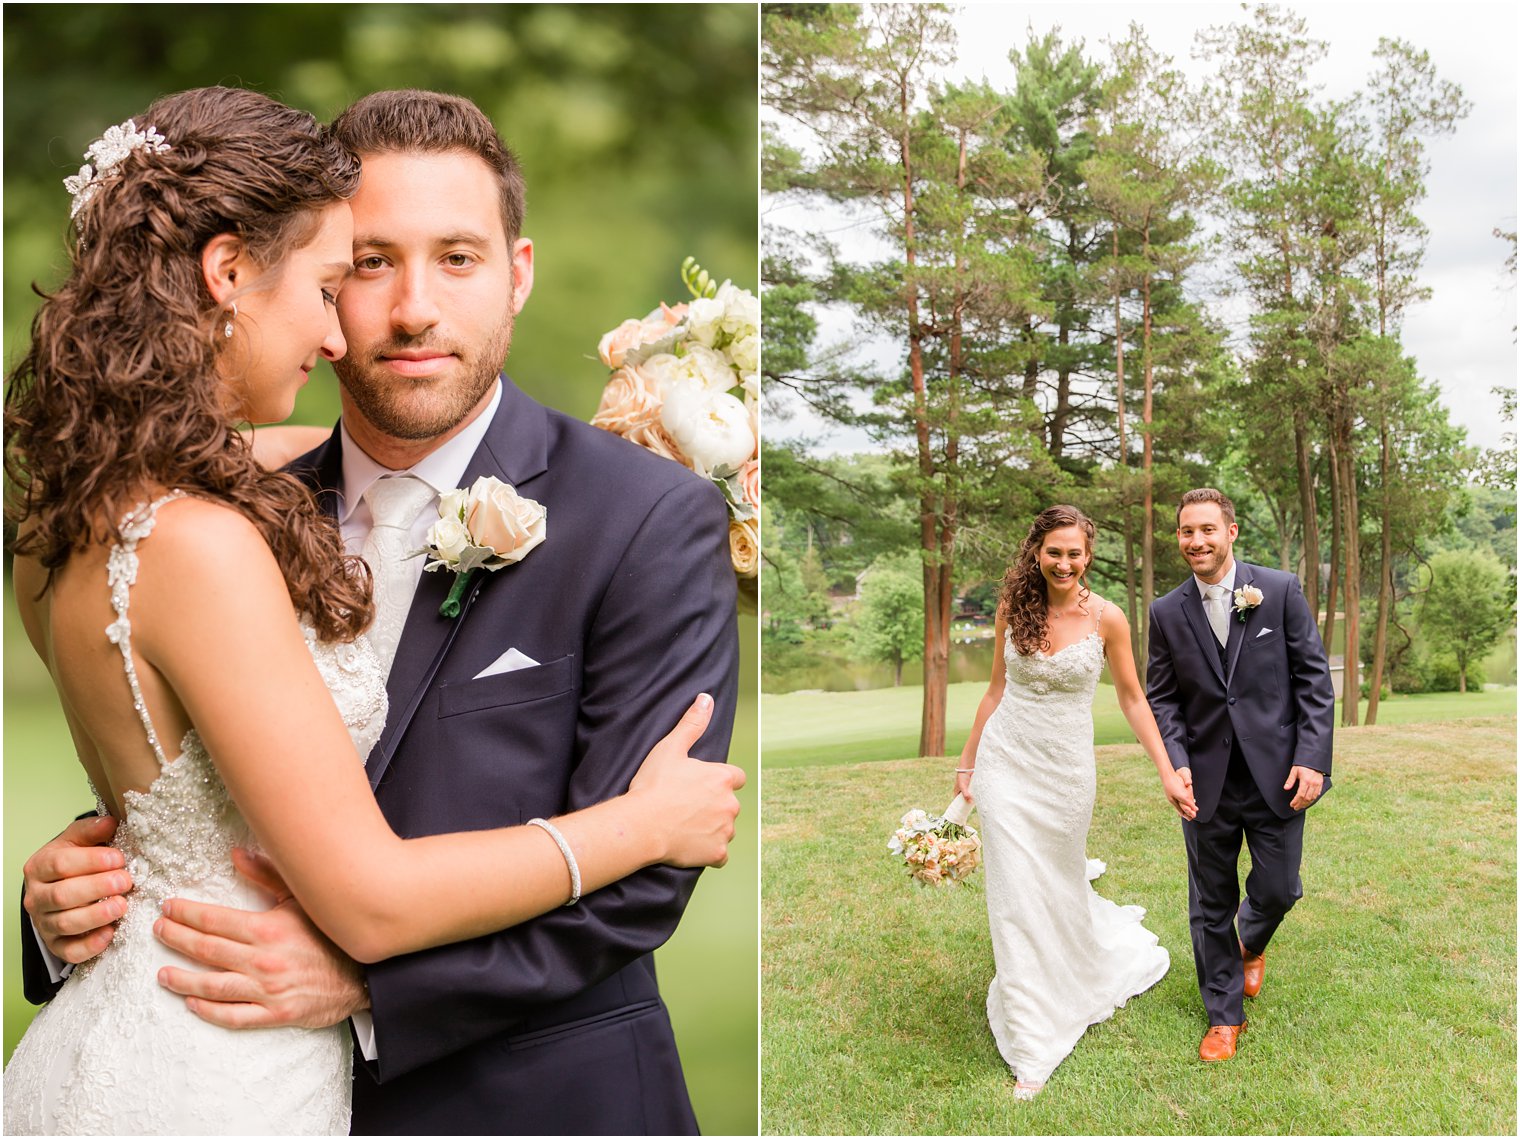 Elegant bride and groom photos by Idalia Photography